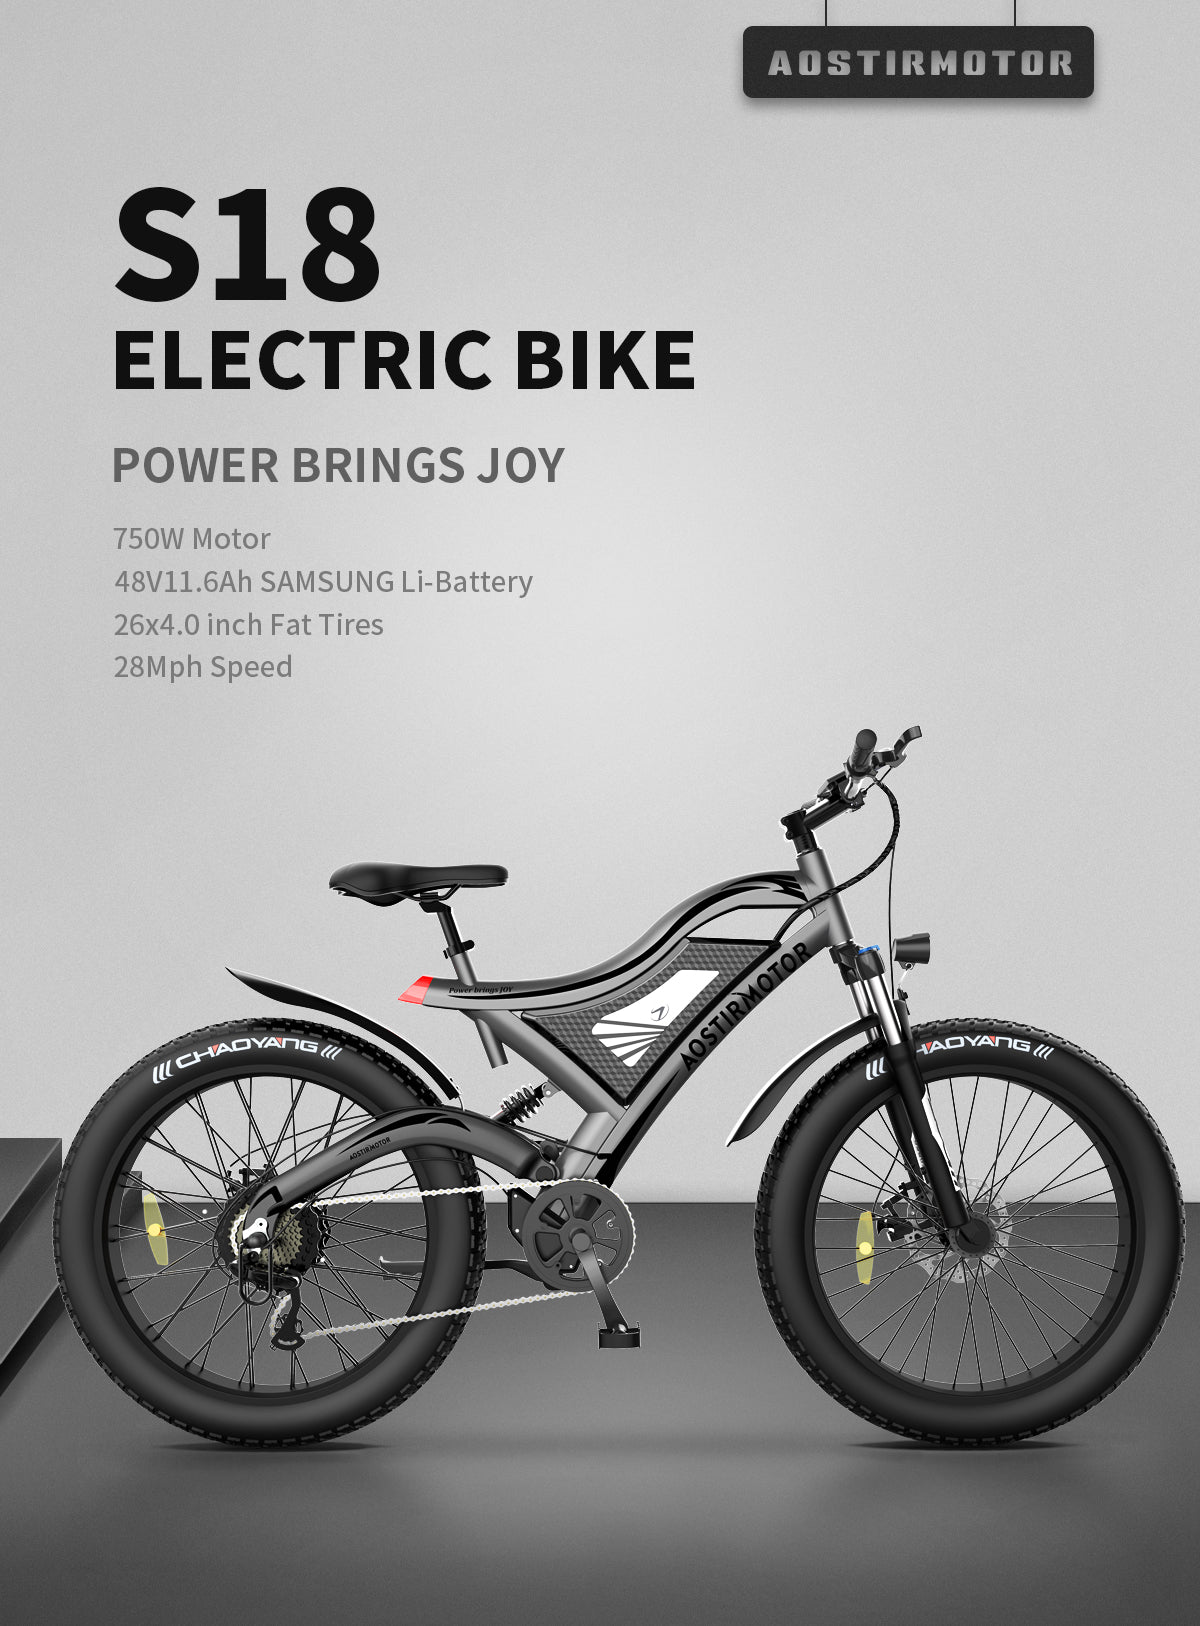 AostirMotor All Terrain Electric Mountain Bike S18 - E-Wheel Warehouse